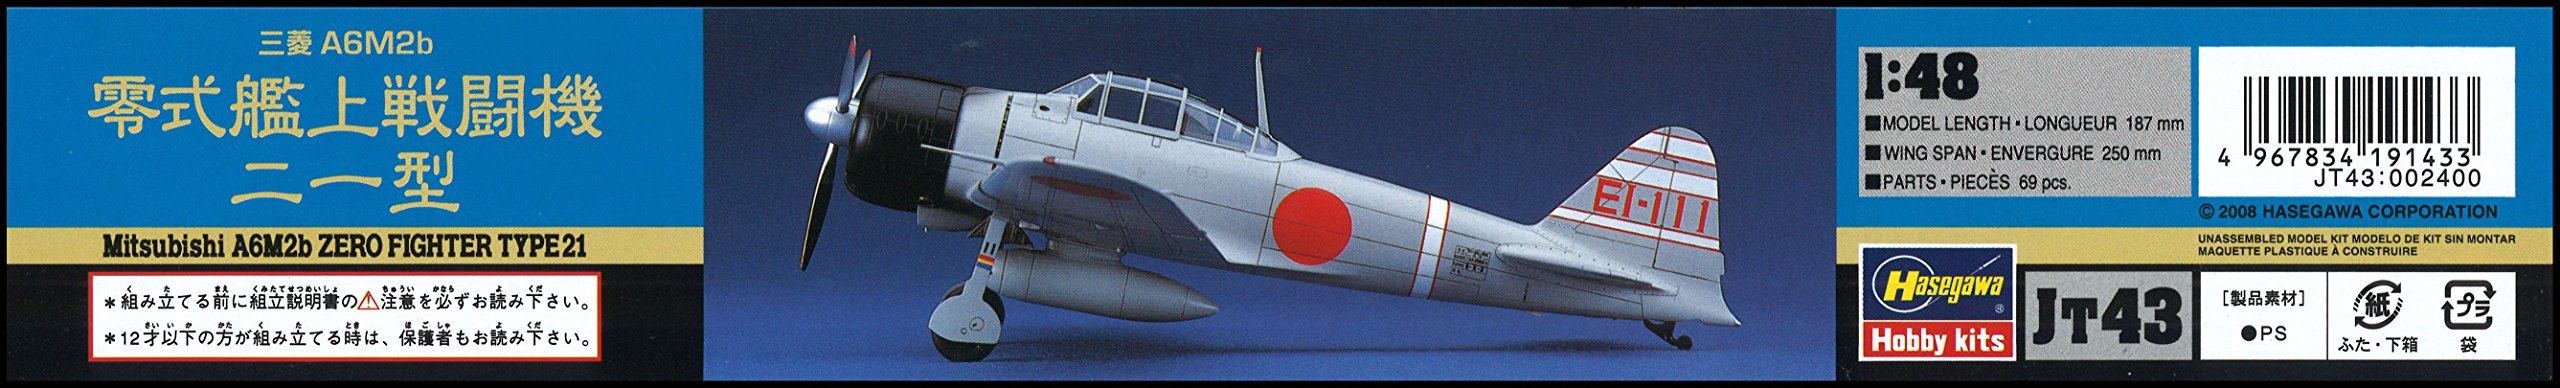 HASEGAWA 1/48 Mitsubishi A6M2B Zero Fighter Typ 21 Plastikmodell